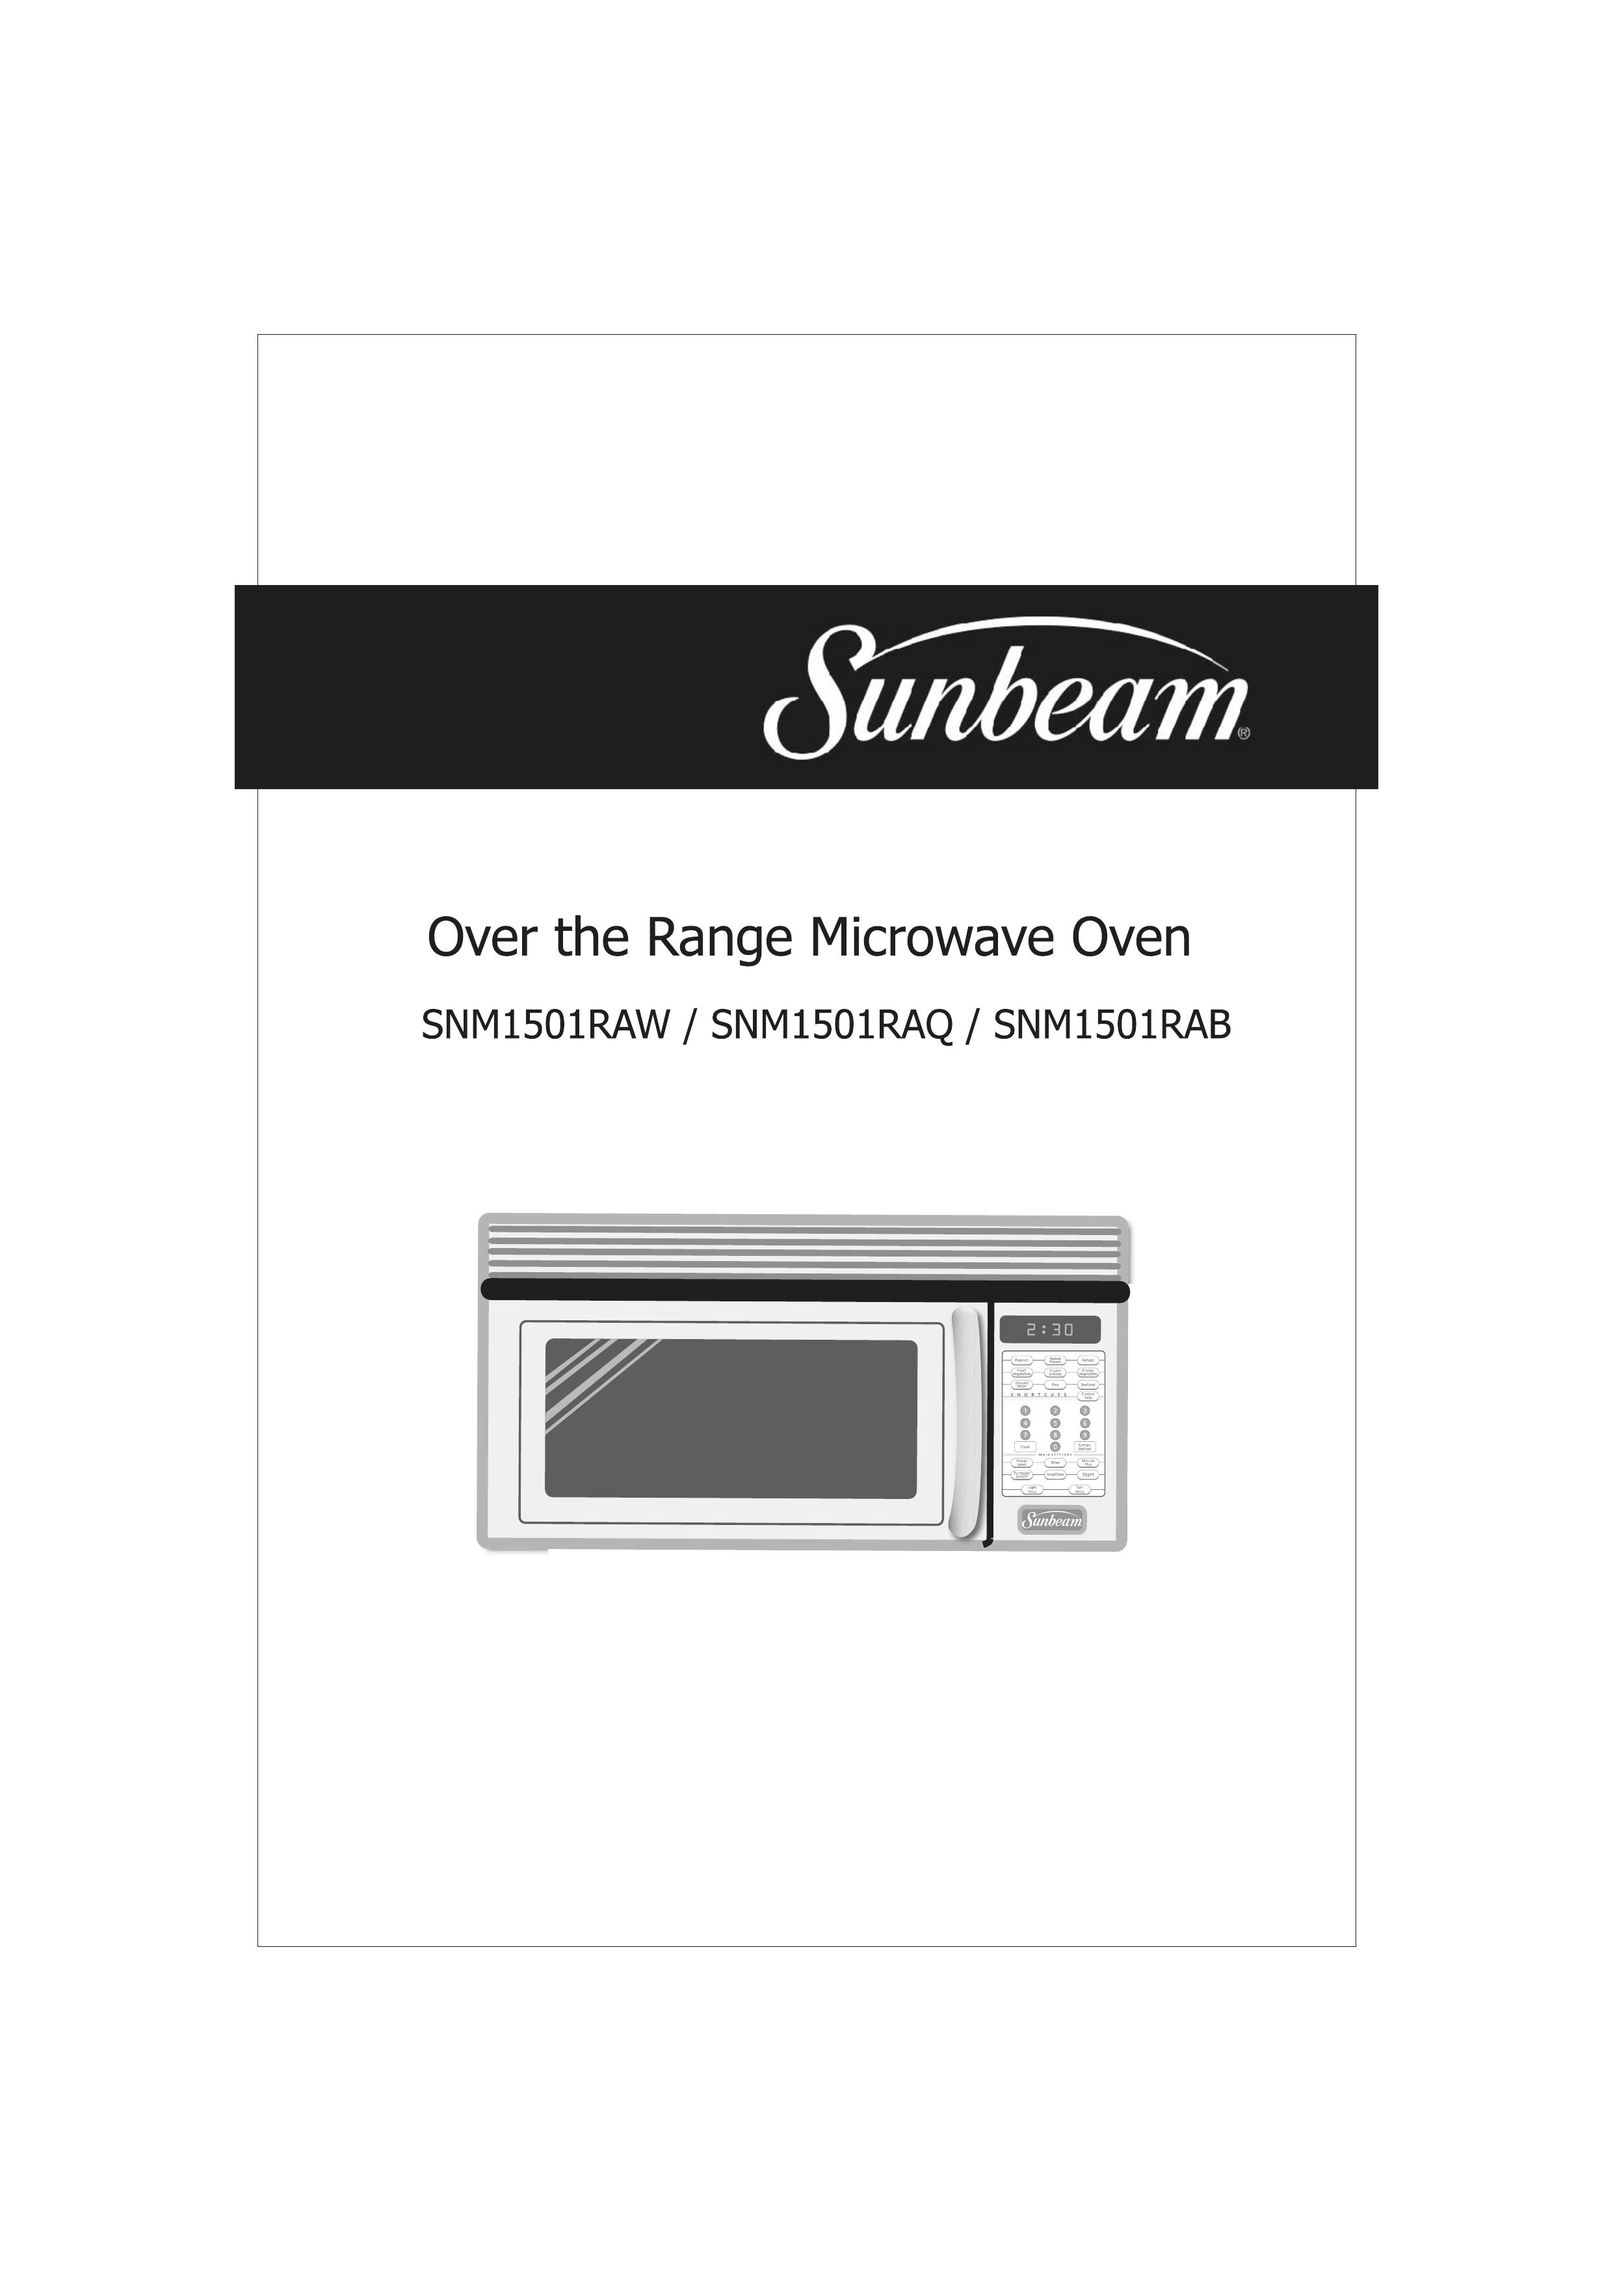 Sunbeam Major Appliances SNM1501RAB Microwave Oven User Manual